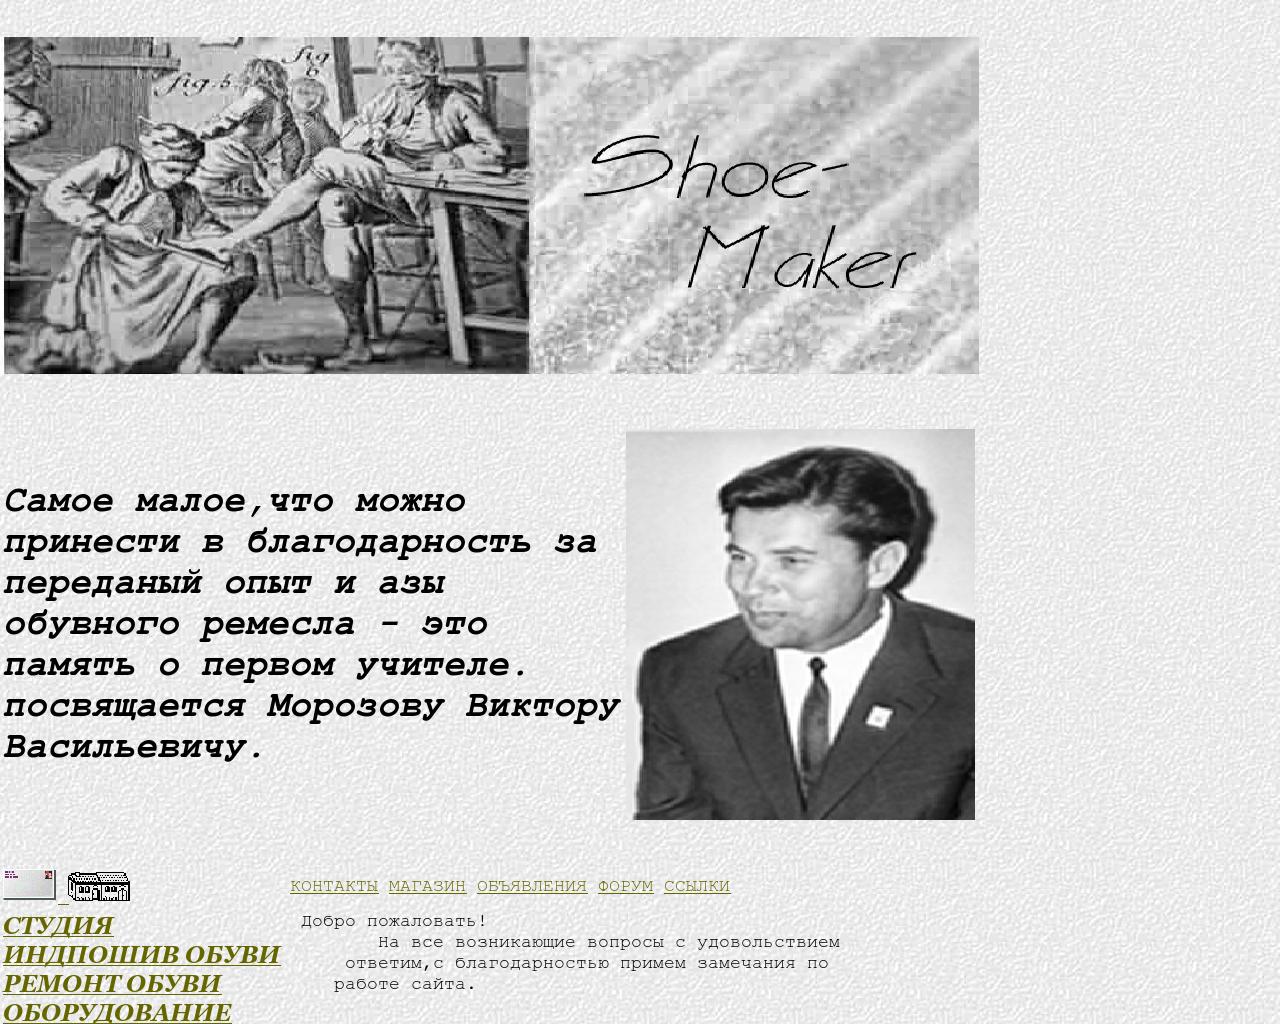 Изображение сайта shoemaker.ru в разрешении 1280x1024